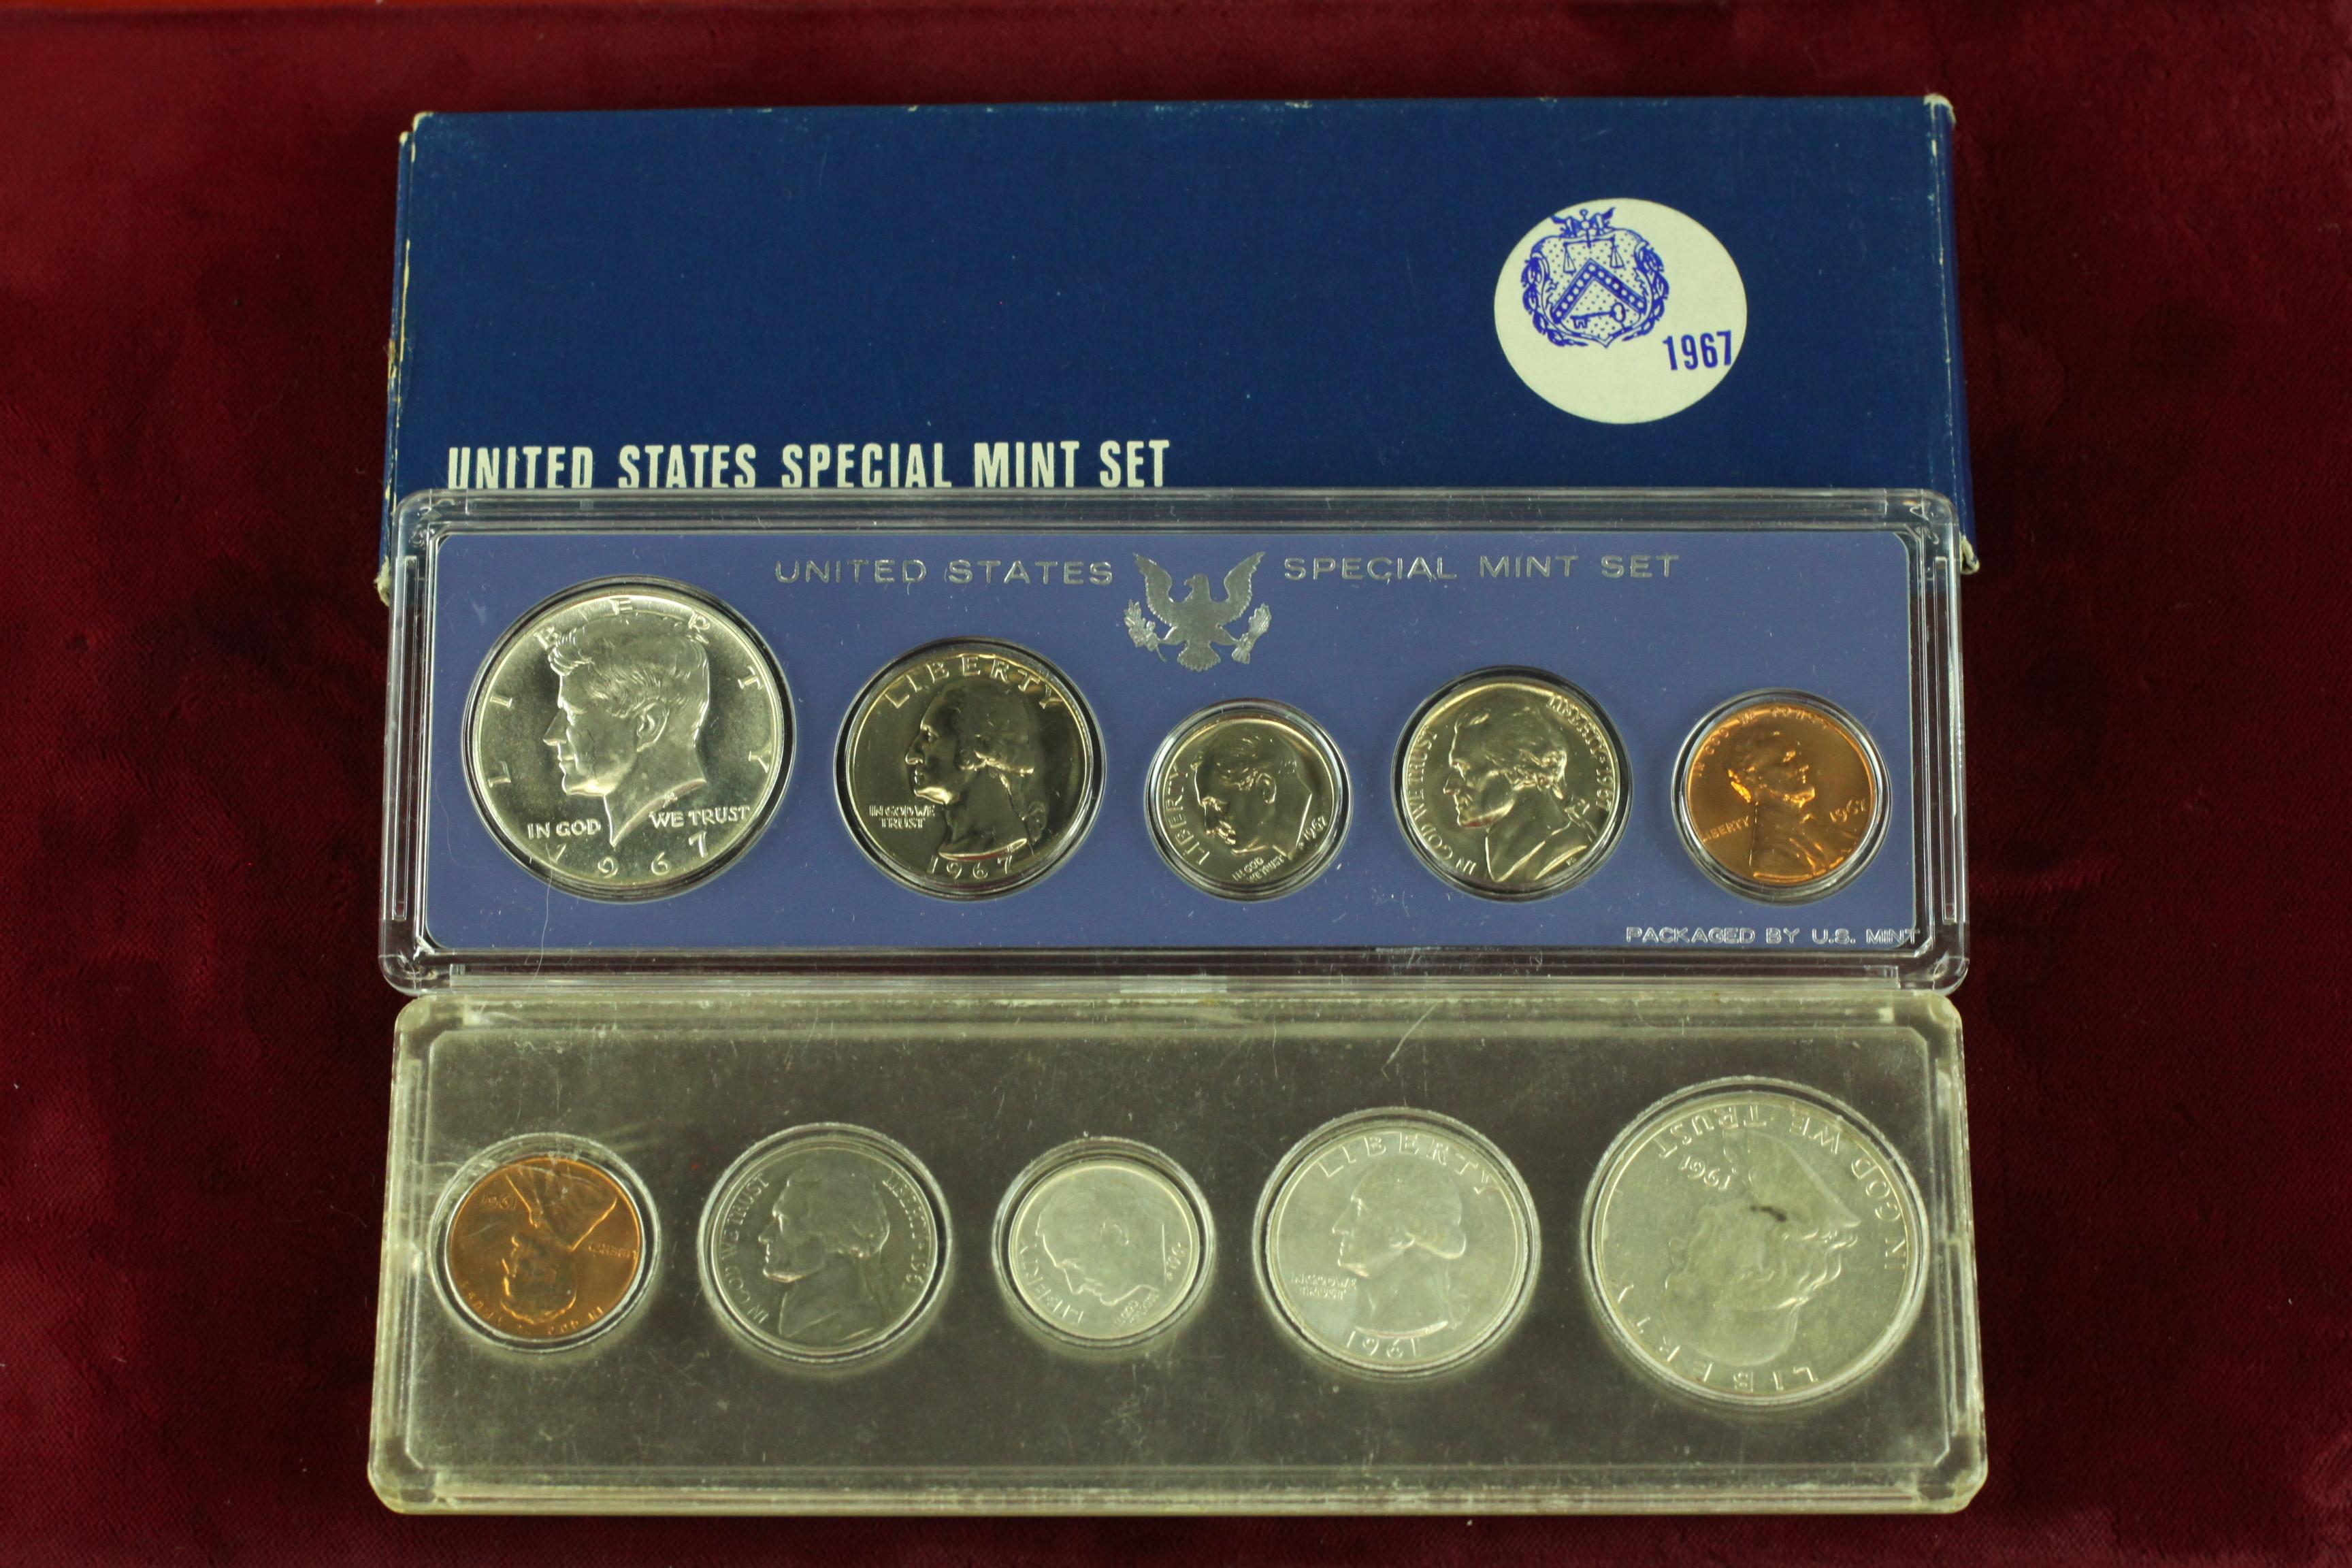 1961US Coin Set & 1967 Special Mint Set